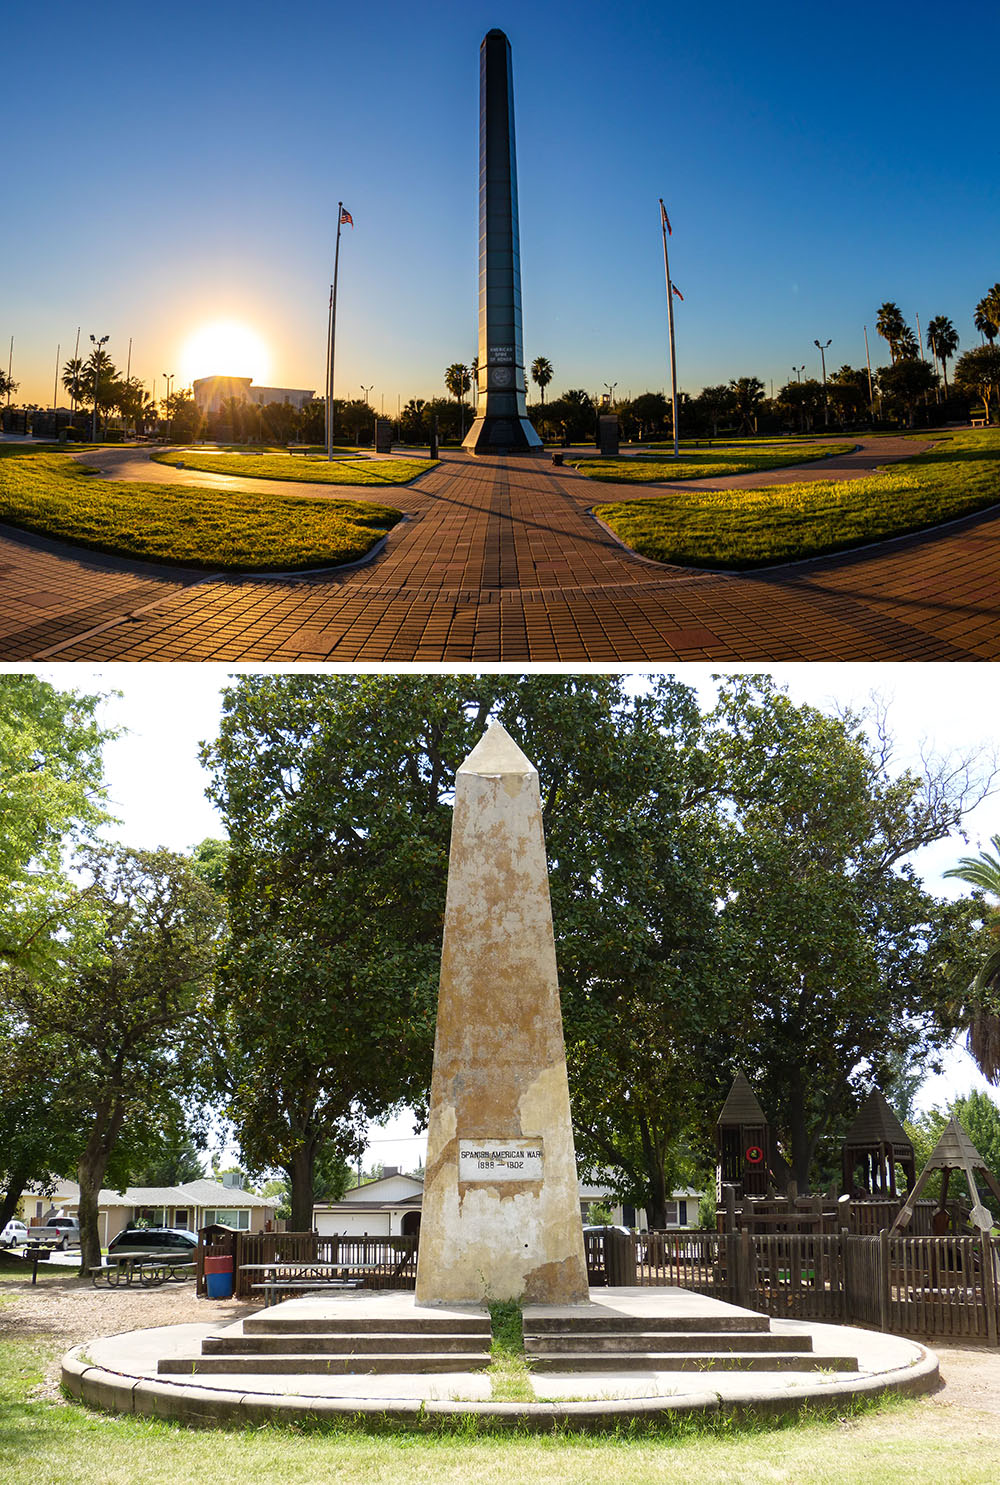 Top: The Veteran’s War Memorial of Texas, 2020. Photograph by Arbo.lifestyle. Bottom: War memorial obelisk in Oakdale, California, 2014. Photograph by Gazebo.